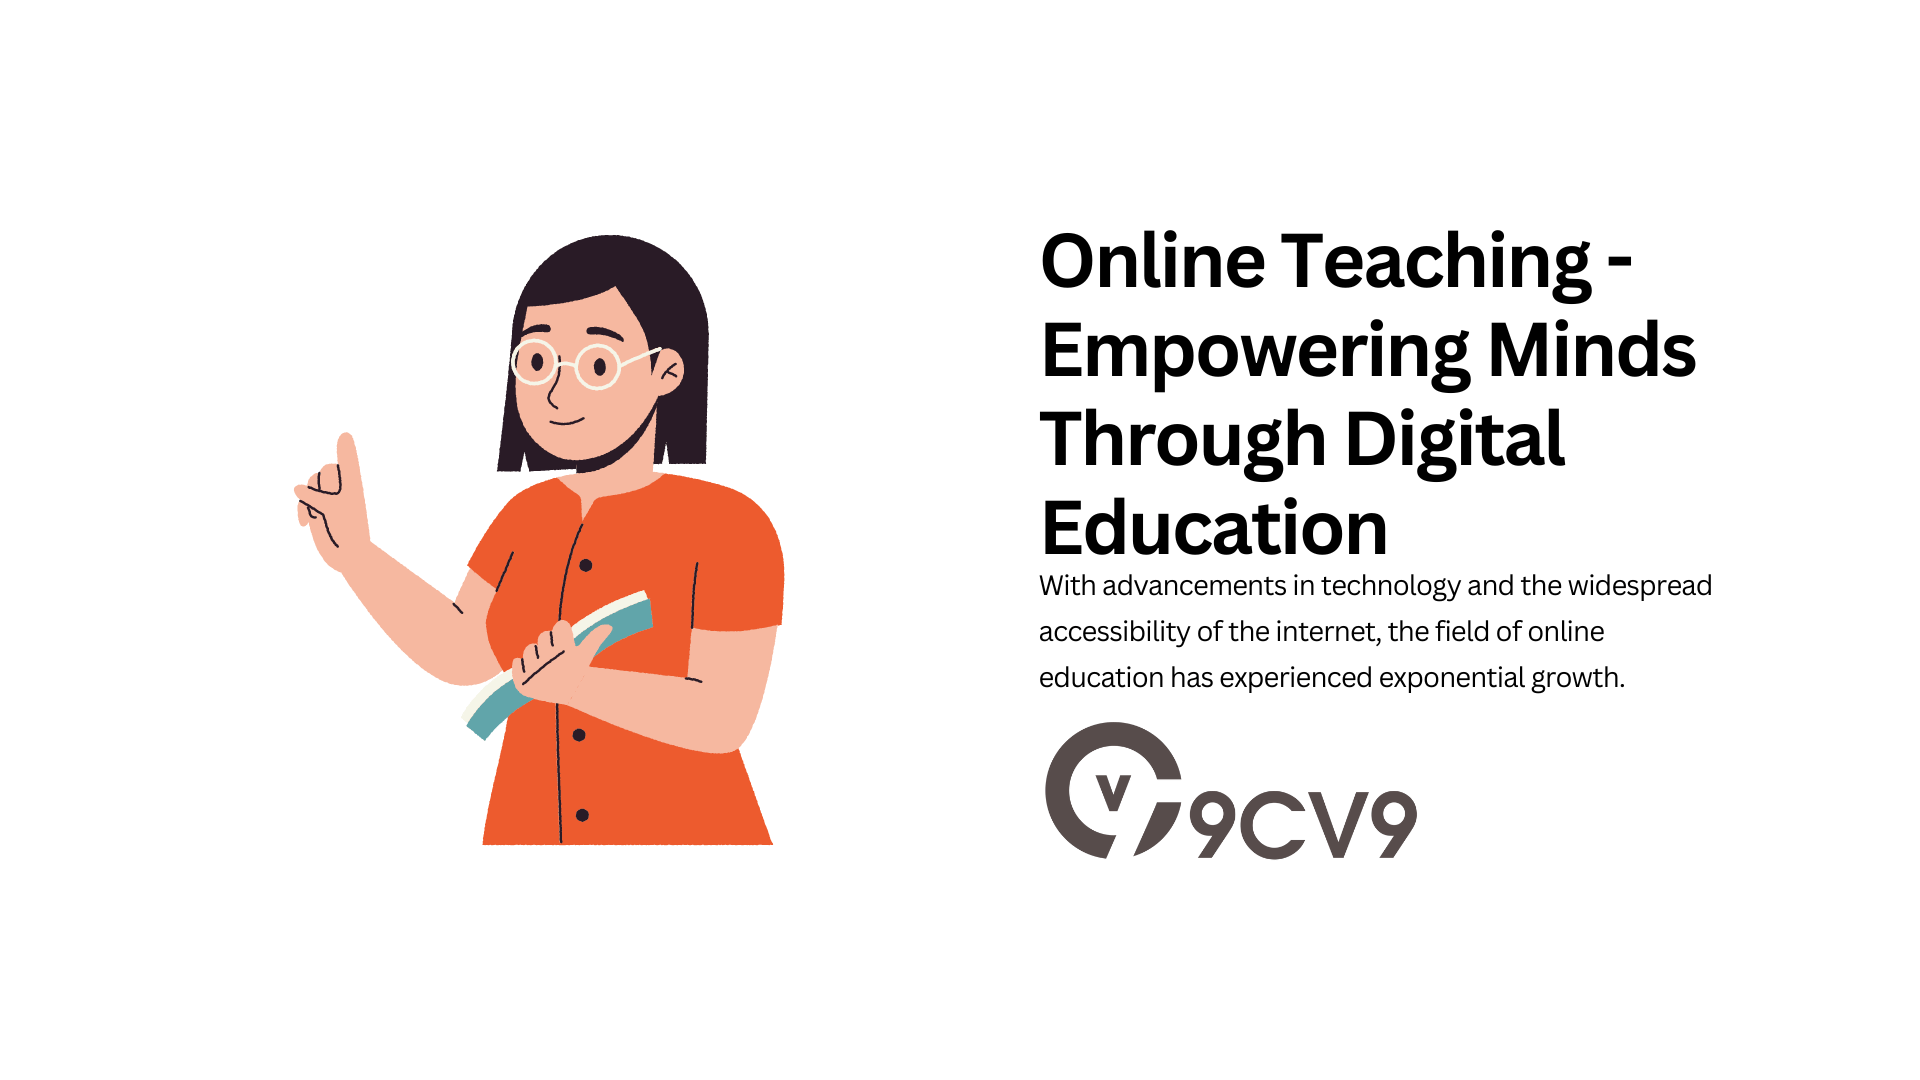 Online Teaching - Empowering Minds Through Digital Education